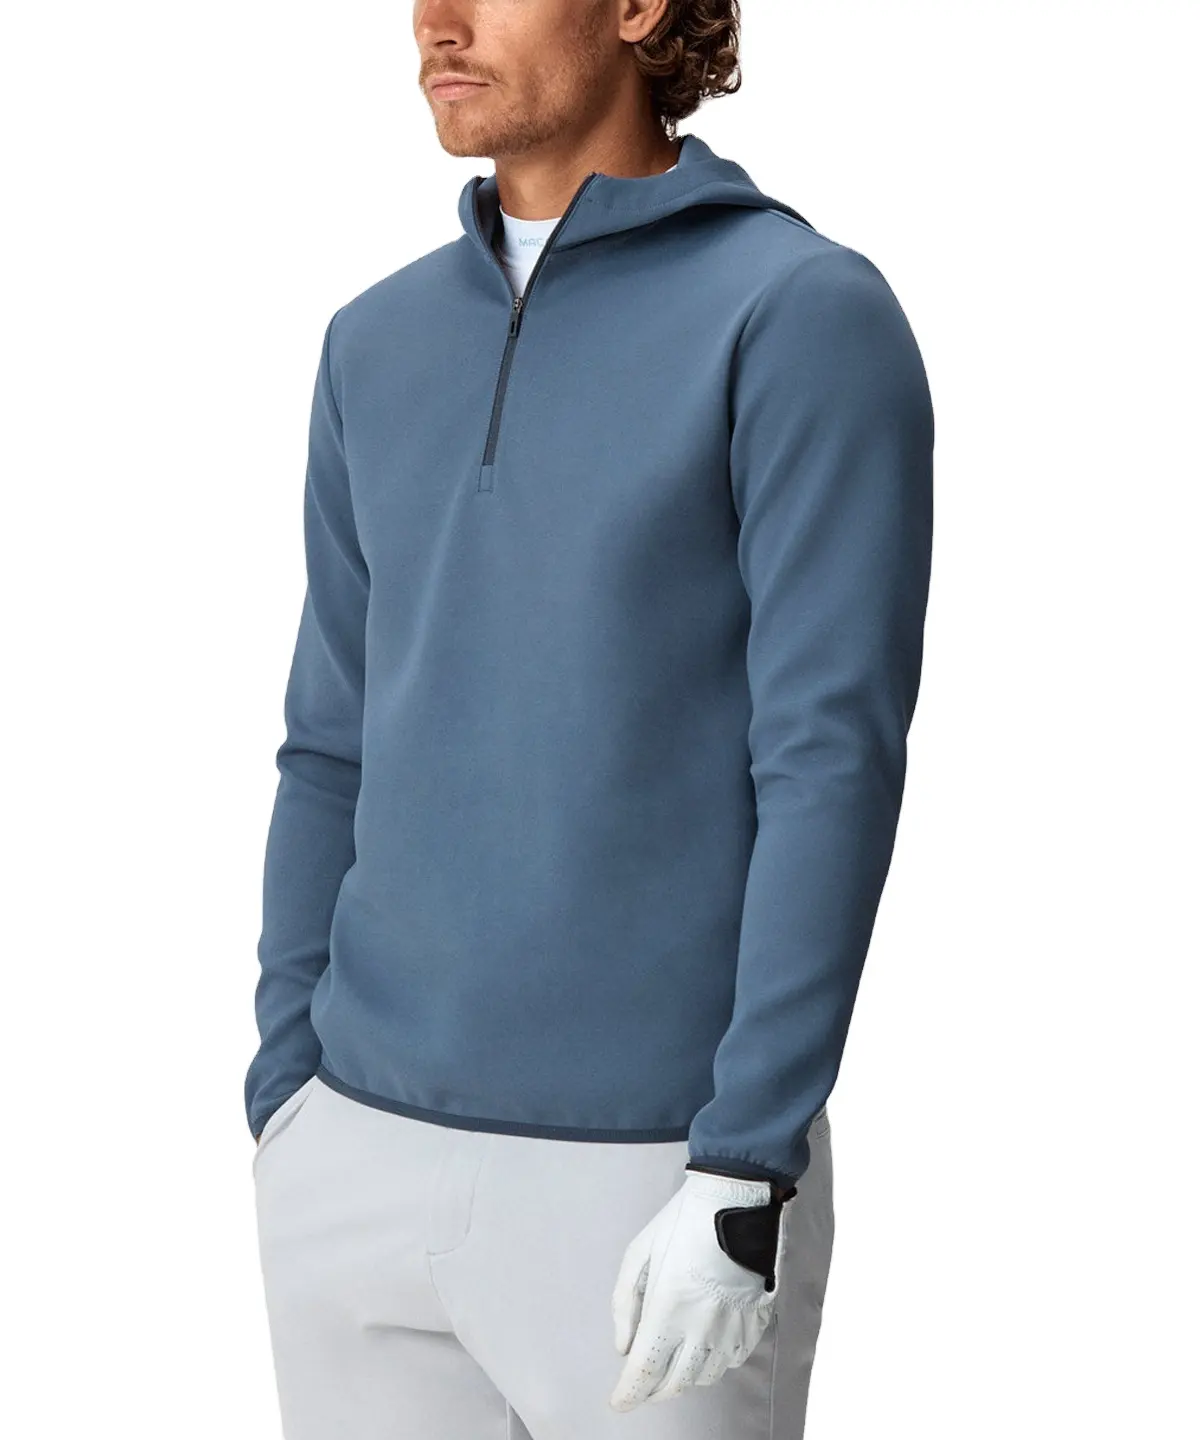 Performance Polyester Spandex Soft Gym Sport Golf Running Hooded Thermal Quarter Zip Pullover Mens 1/4 Zip Fleece Hoodie